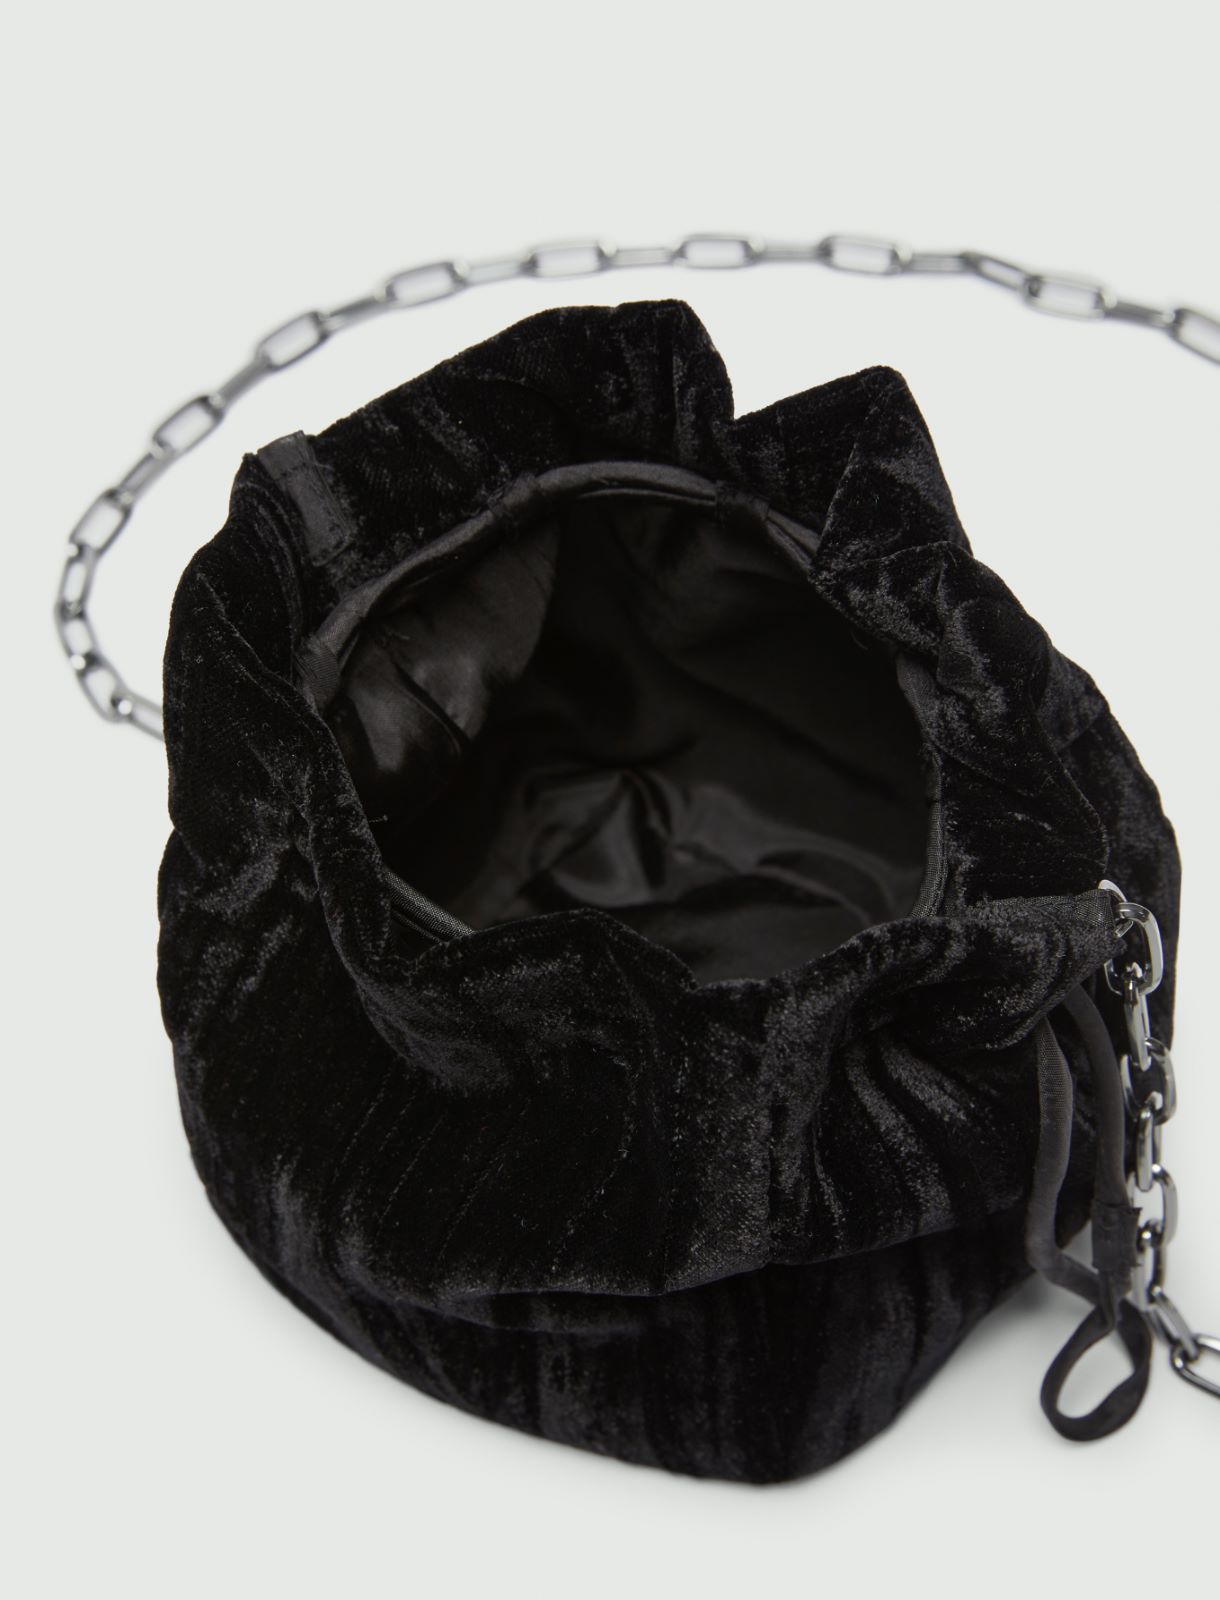 Velvet bag - Black - Marina Rinaldi - 3